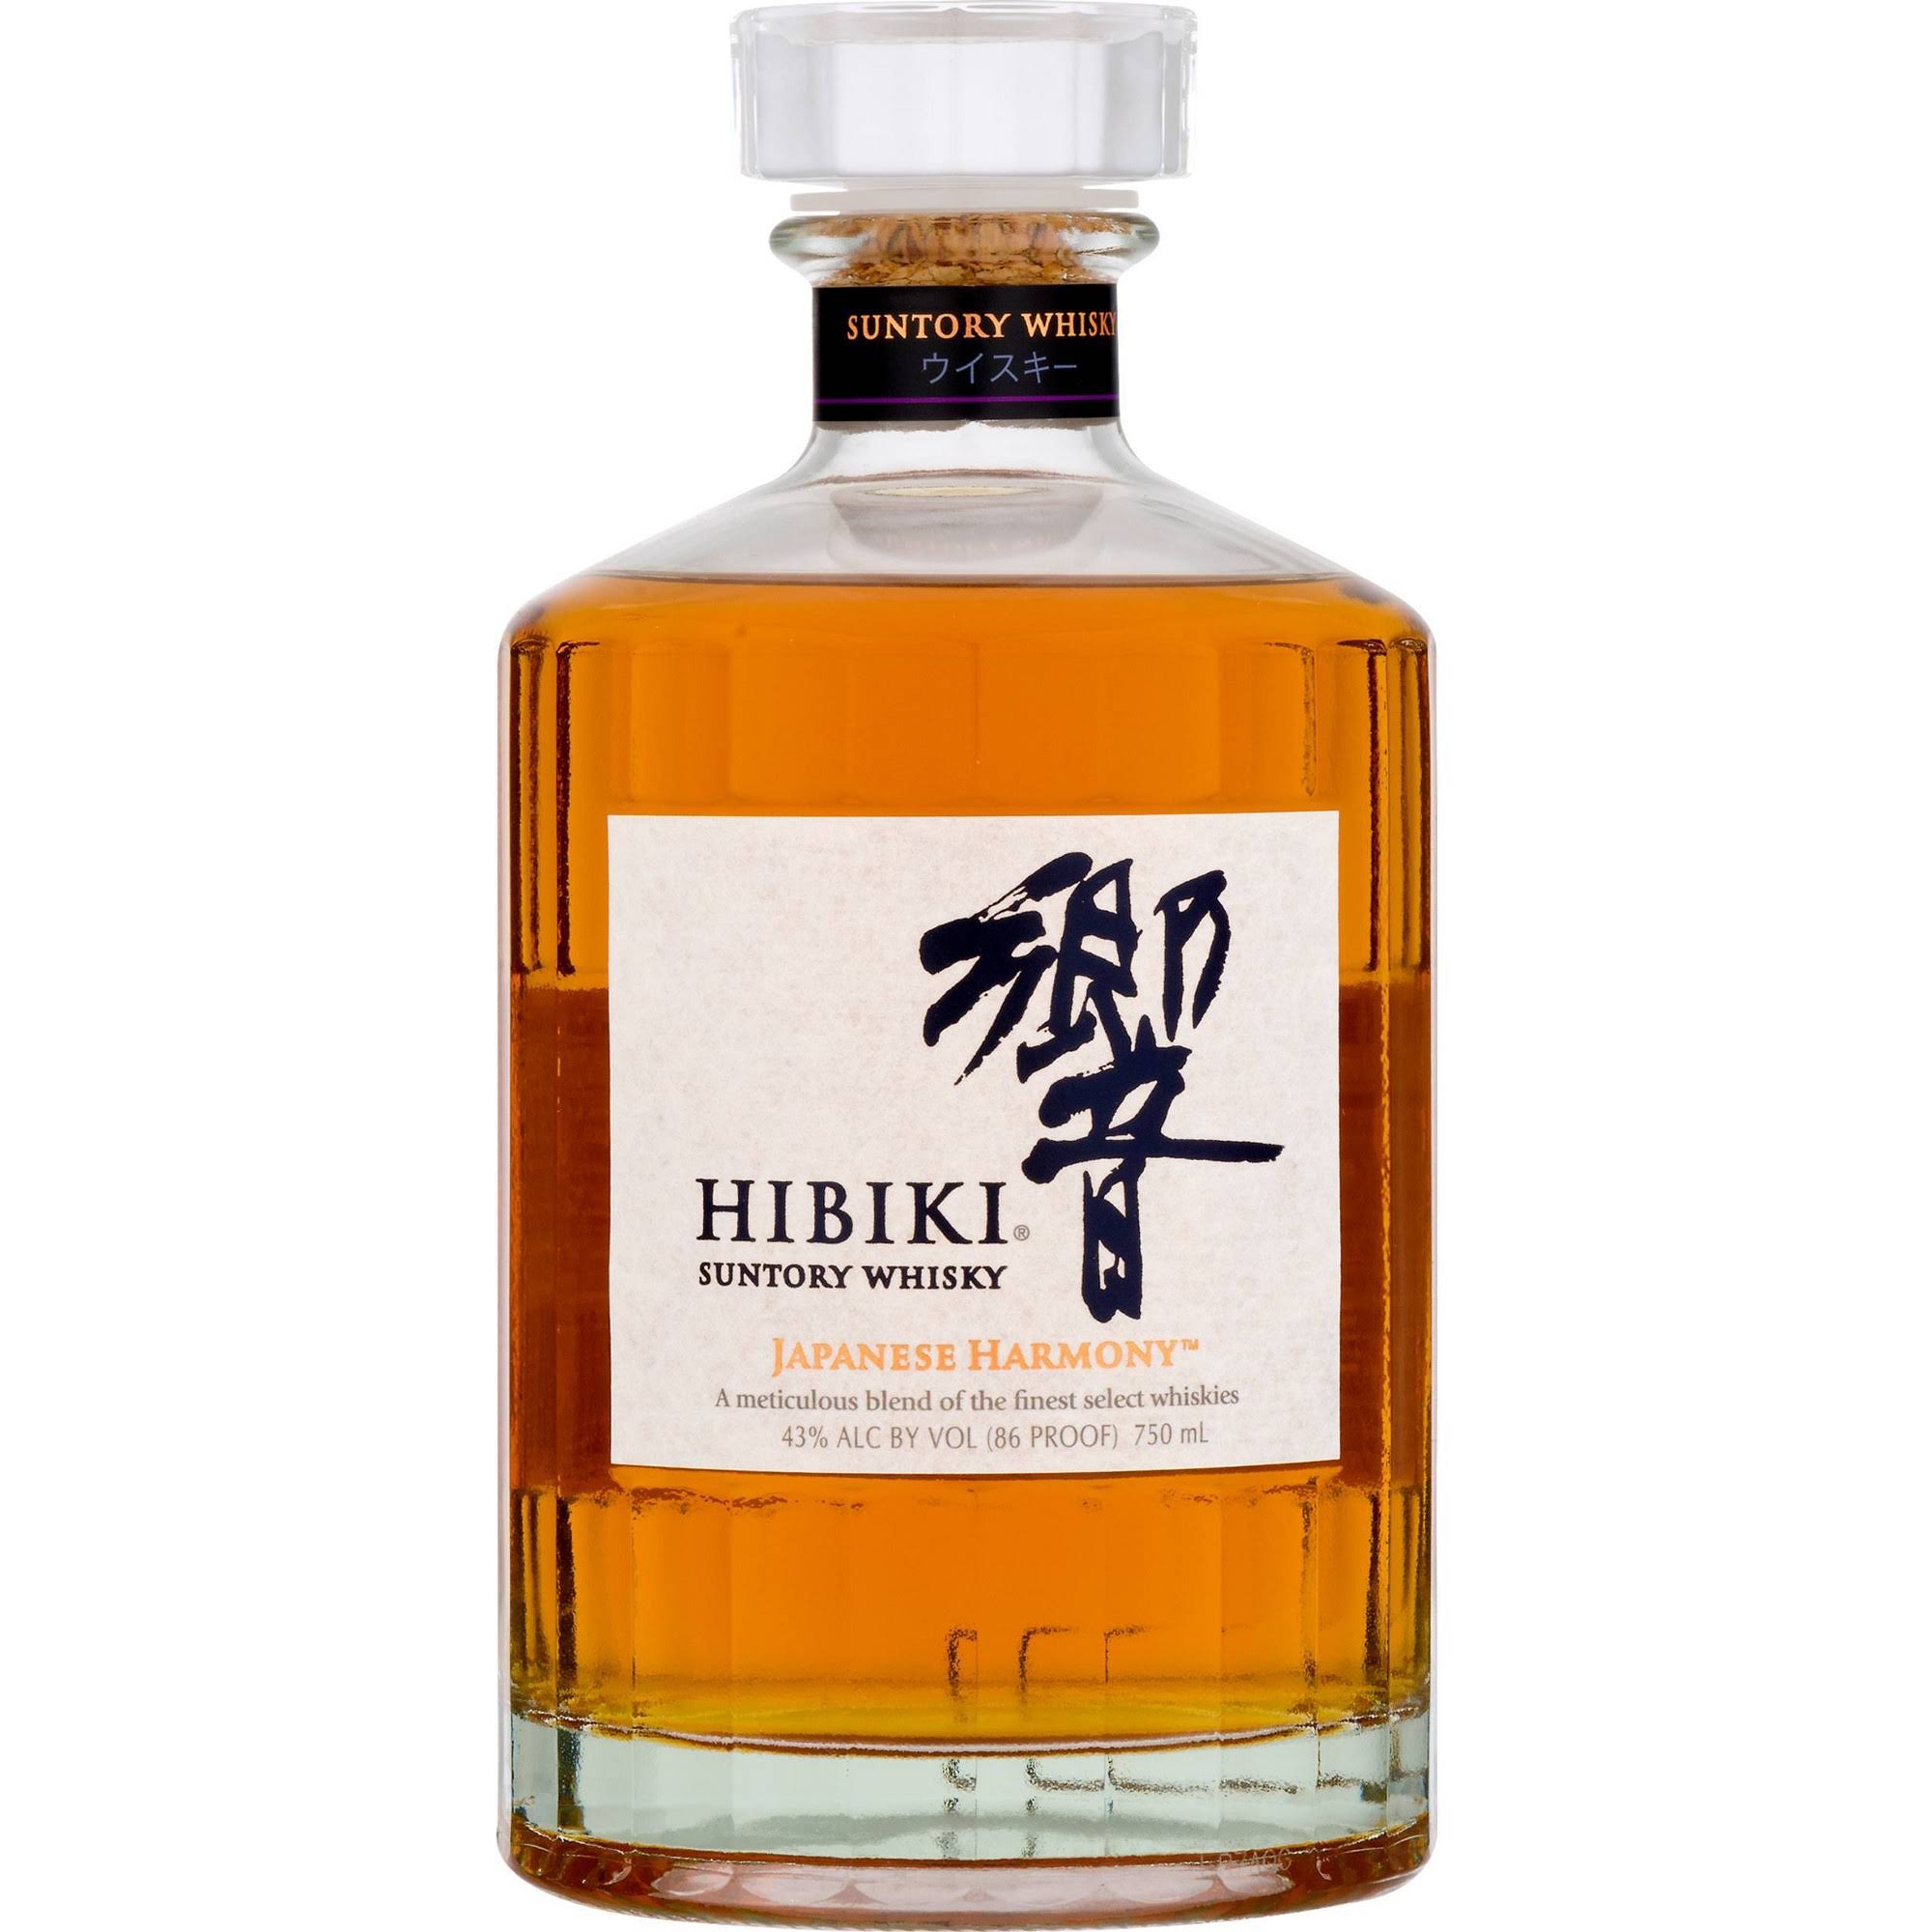 Hibiki Japanese Harmony Suntory Whisky - 750 ml bottle